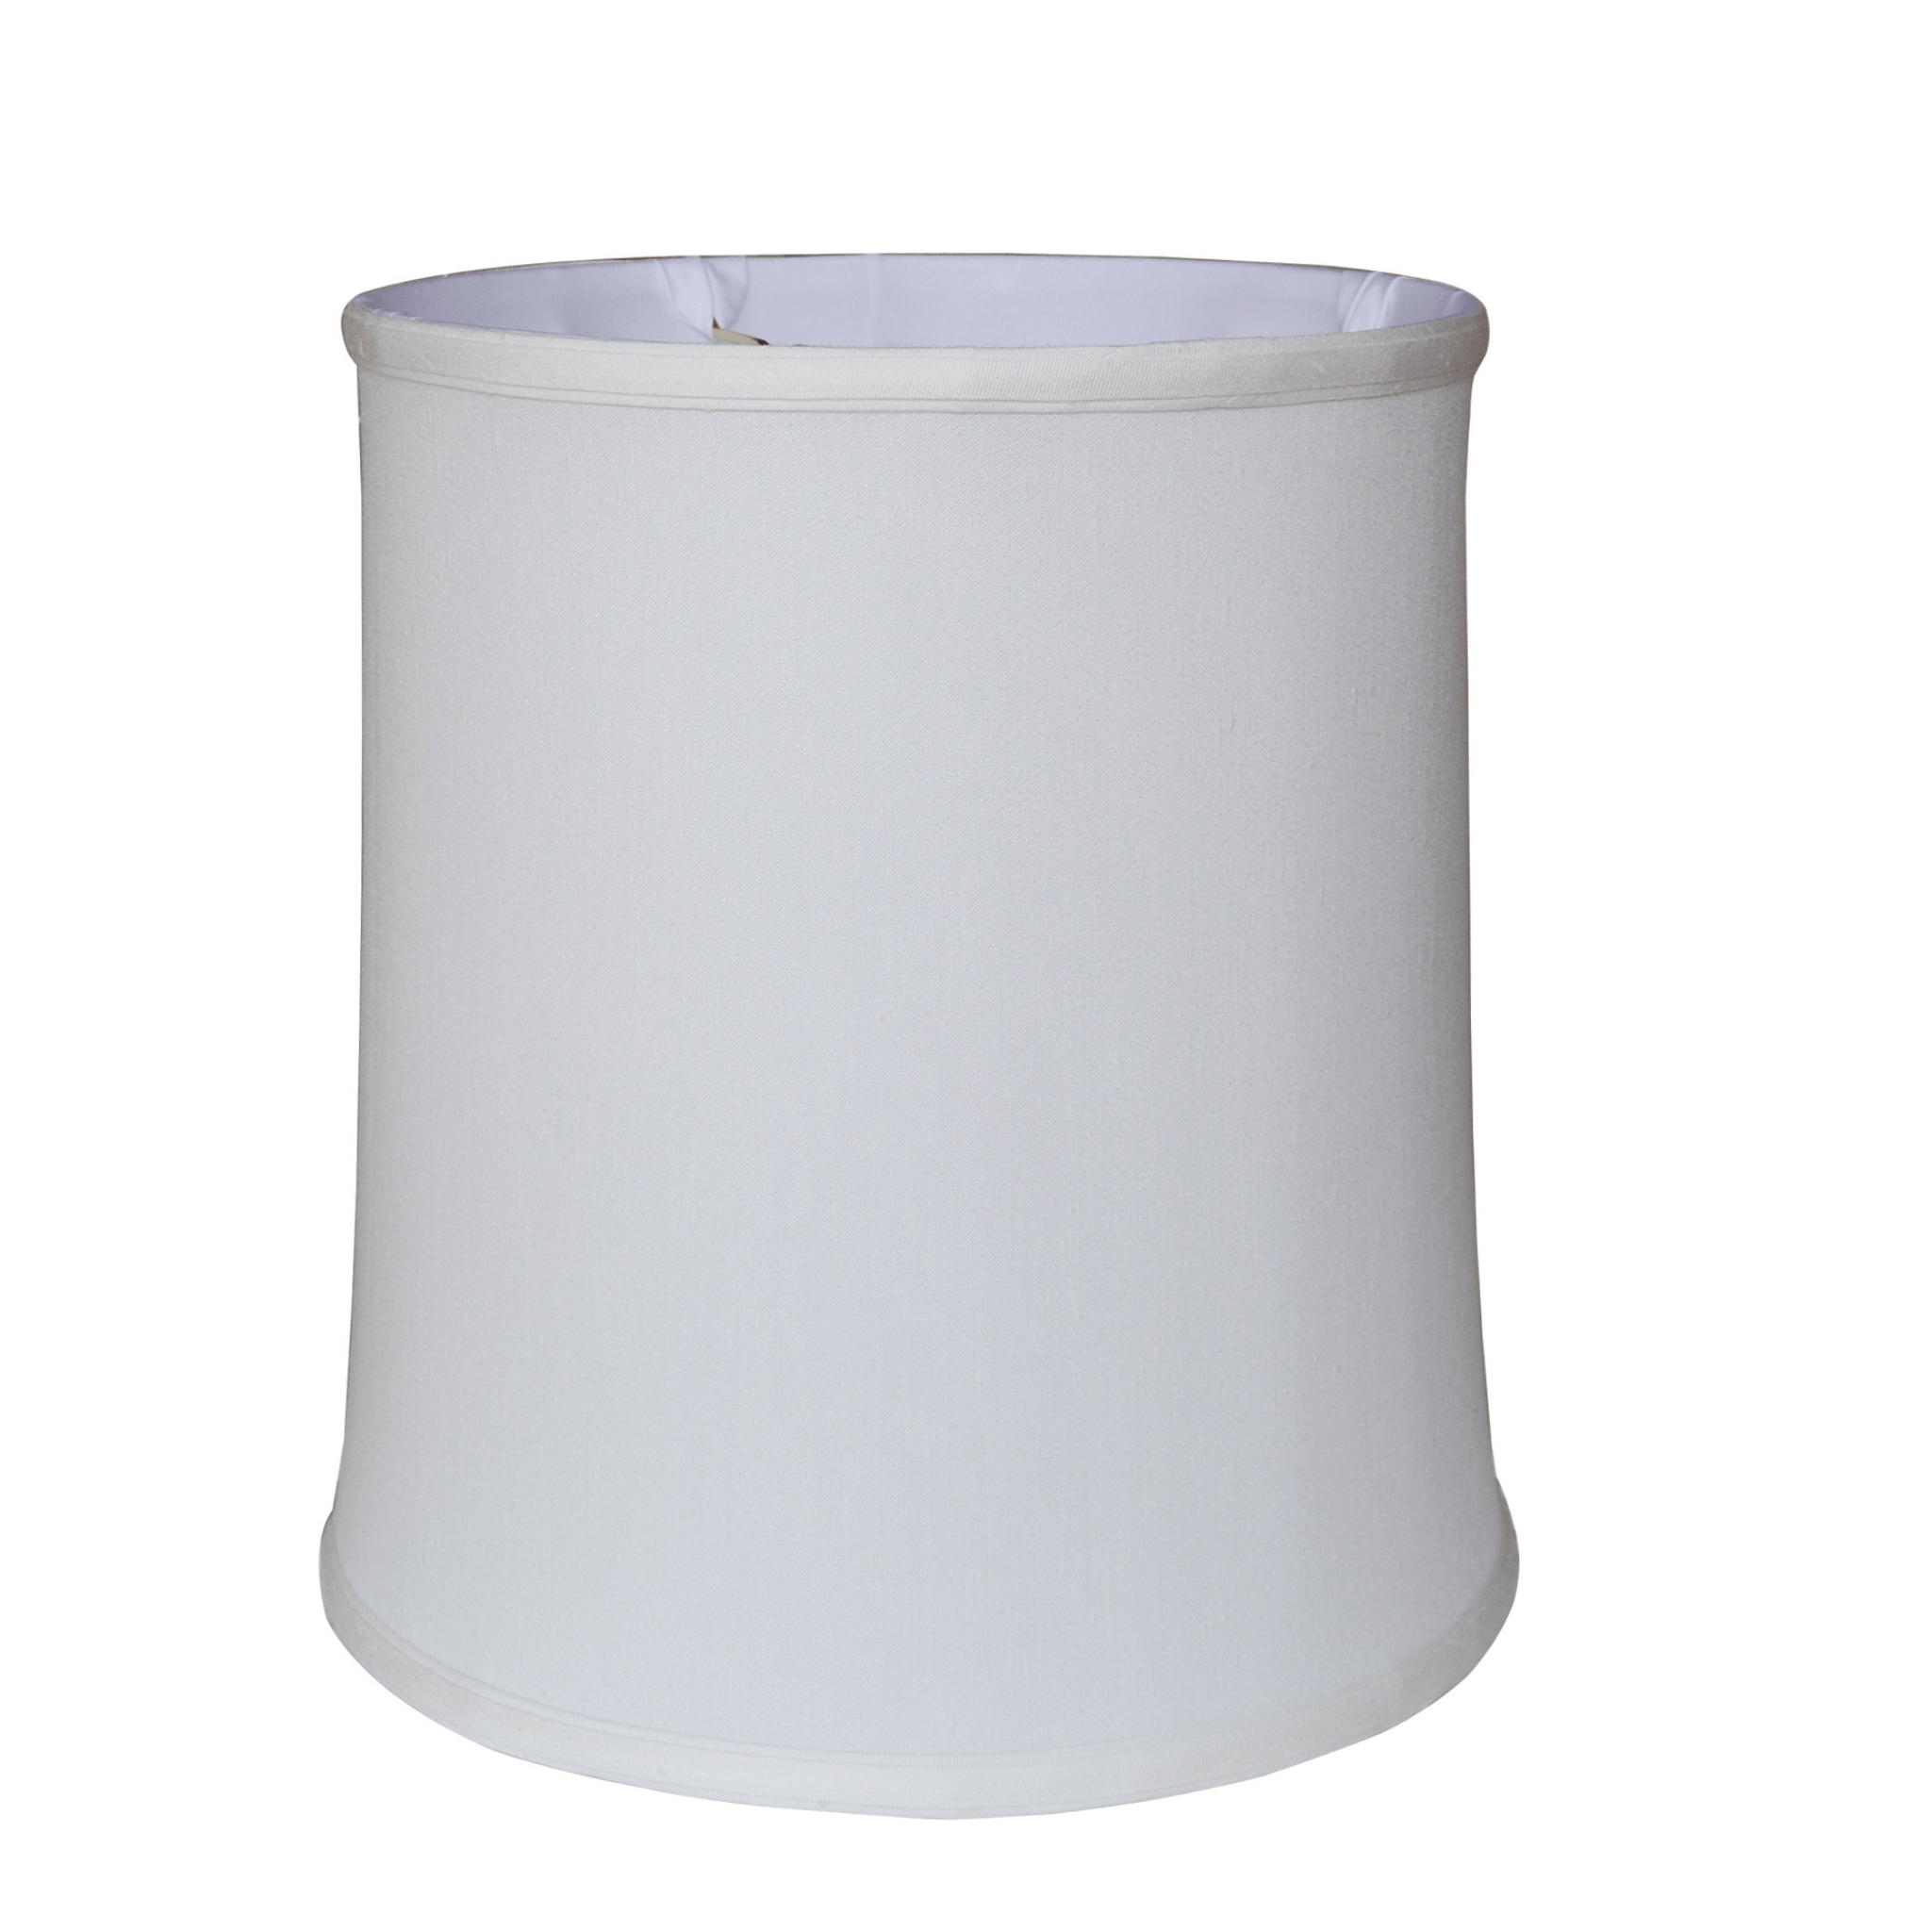 EE lamp shade 11 x 12 x 13" (Washer 1 1/2" Recess) / Supreme Satin / Natural White Basic Drum No Hug Double Lining Supreme Satin Lamp Shade